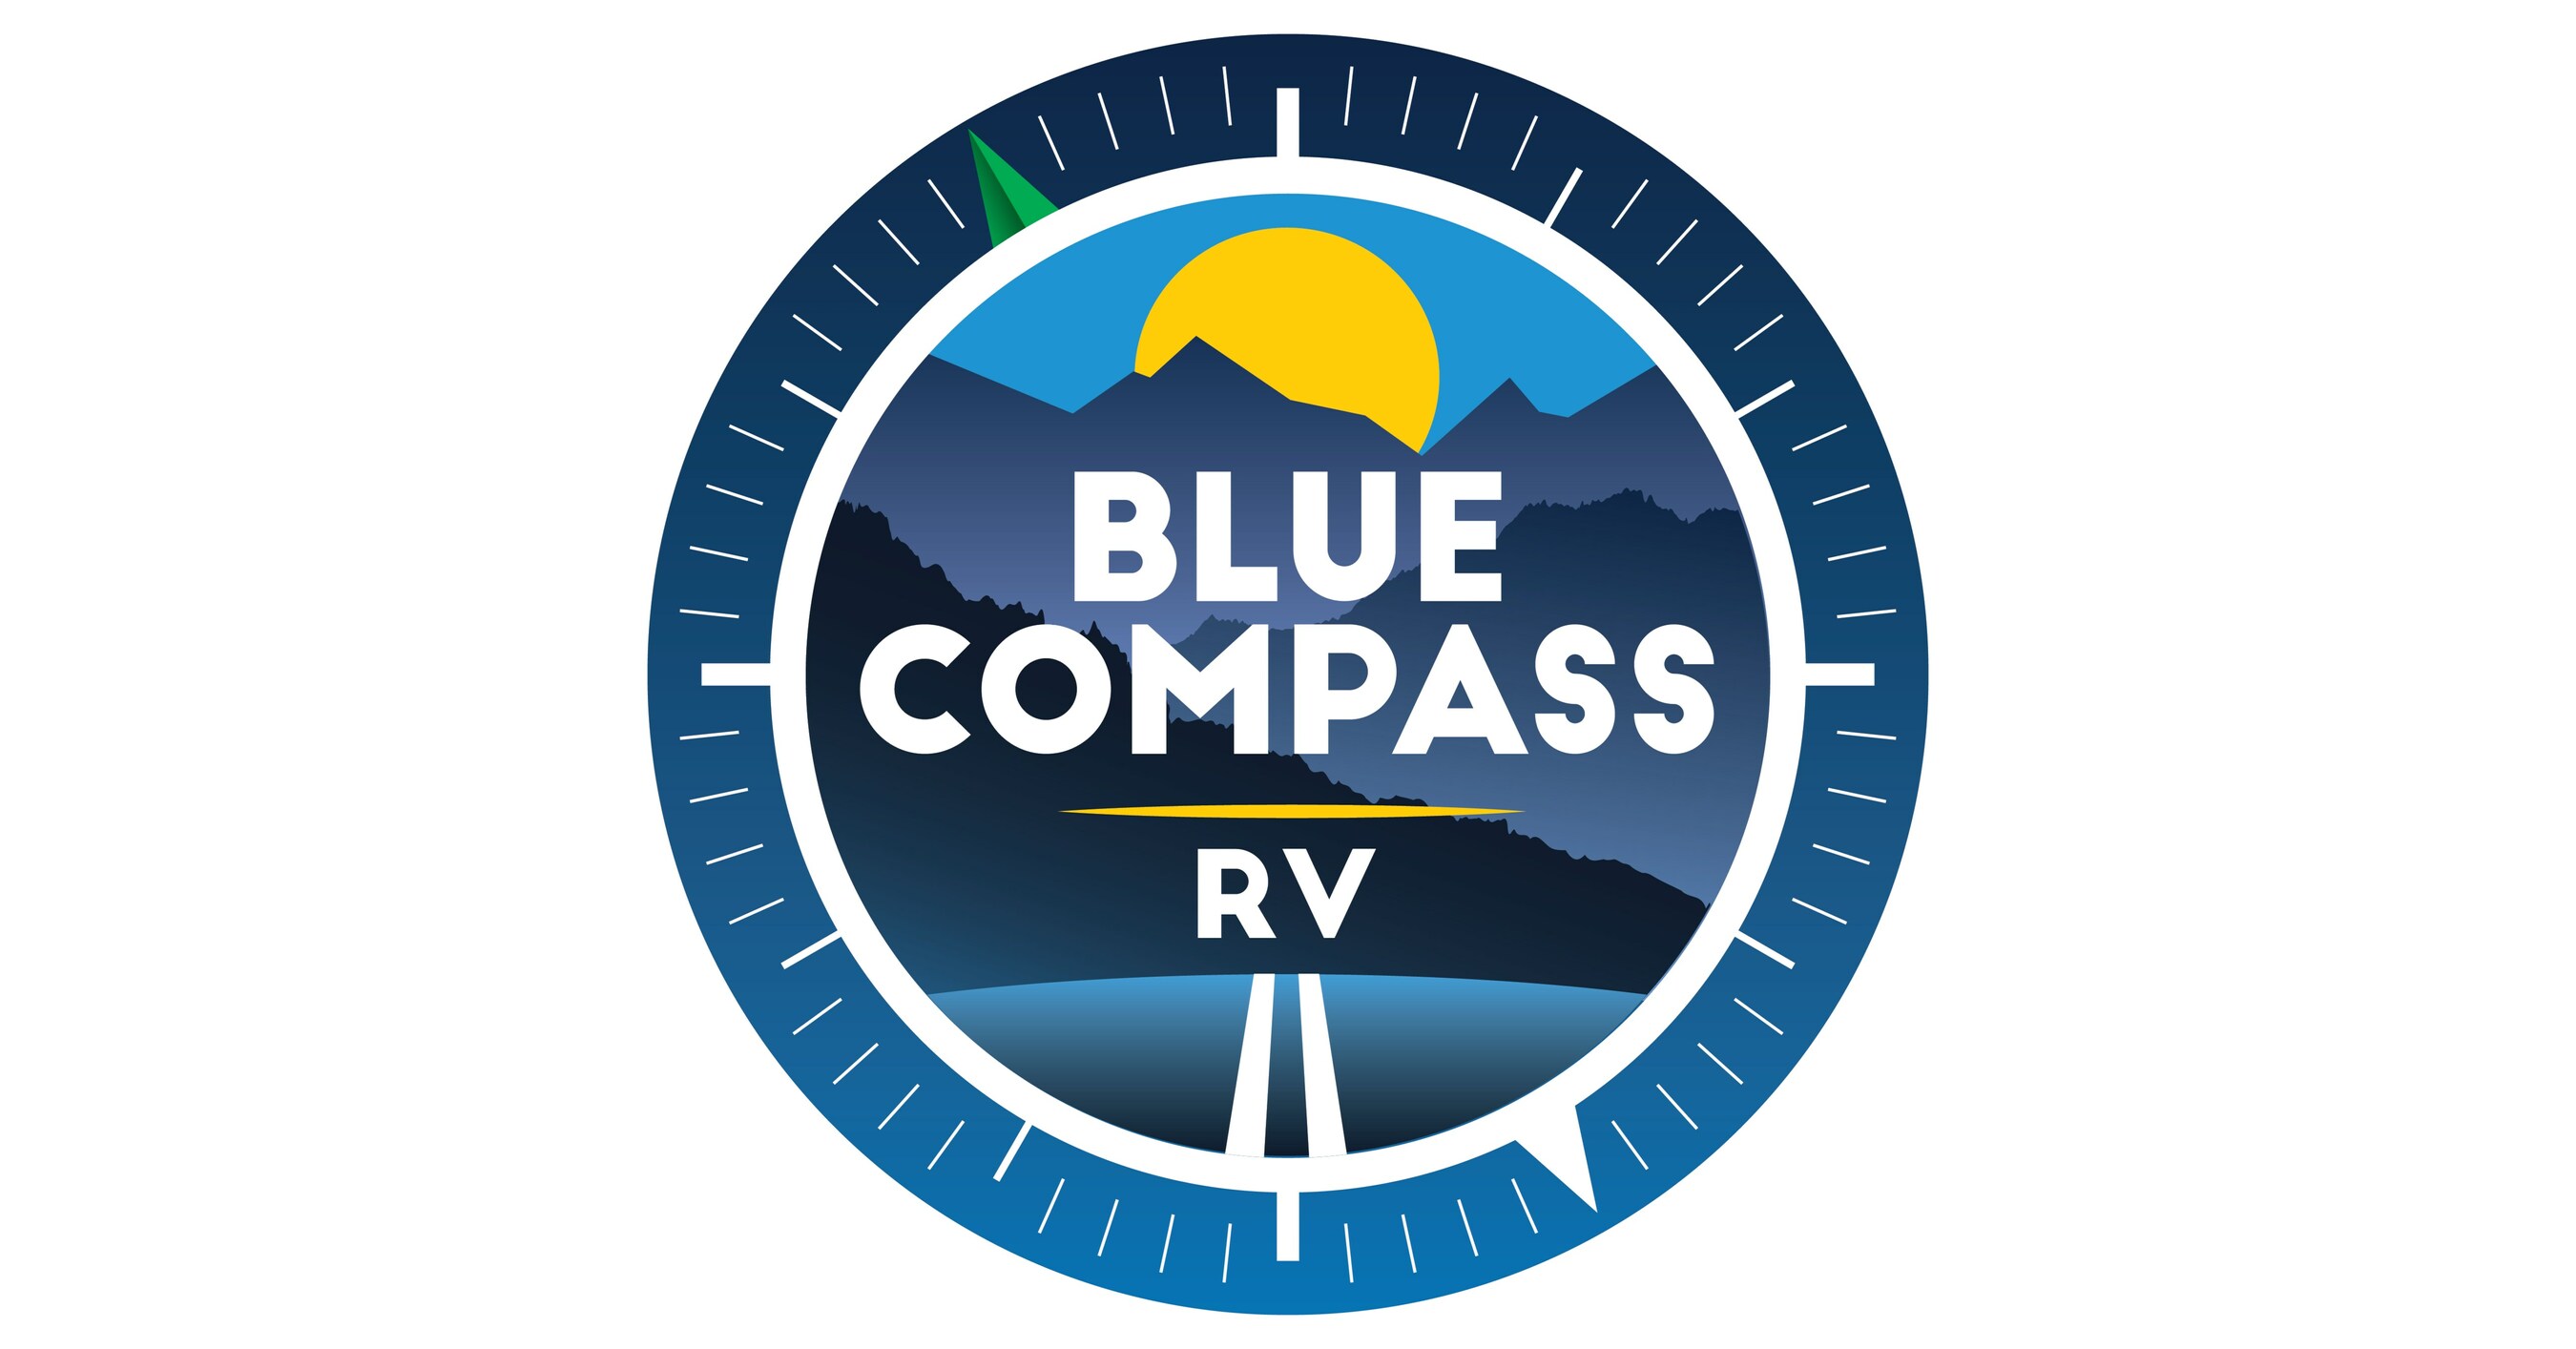 Blue Compass RV Company Profile: Valuation, Funding & Investors